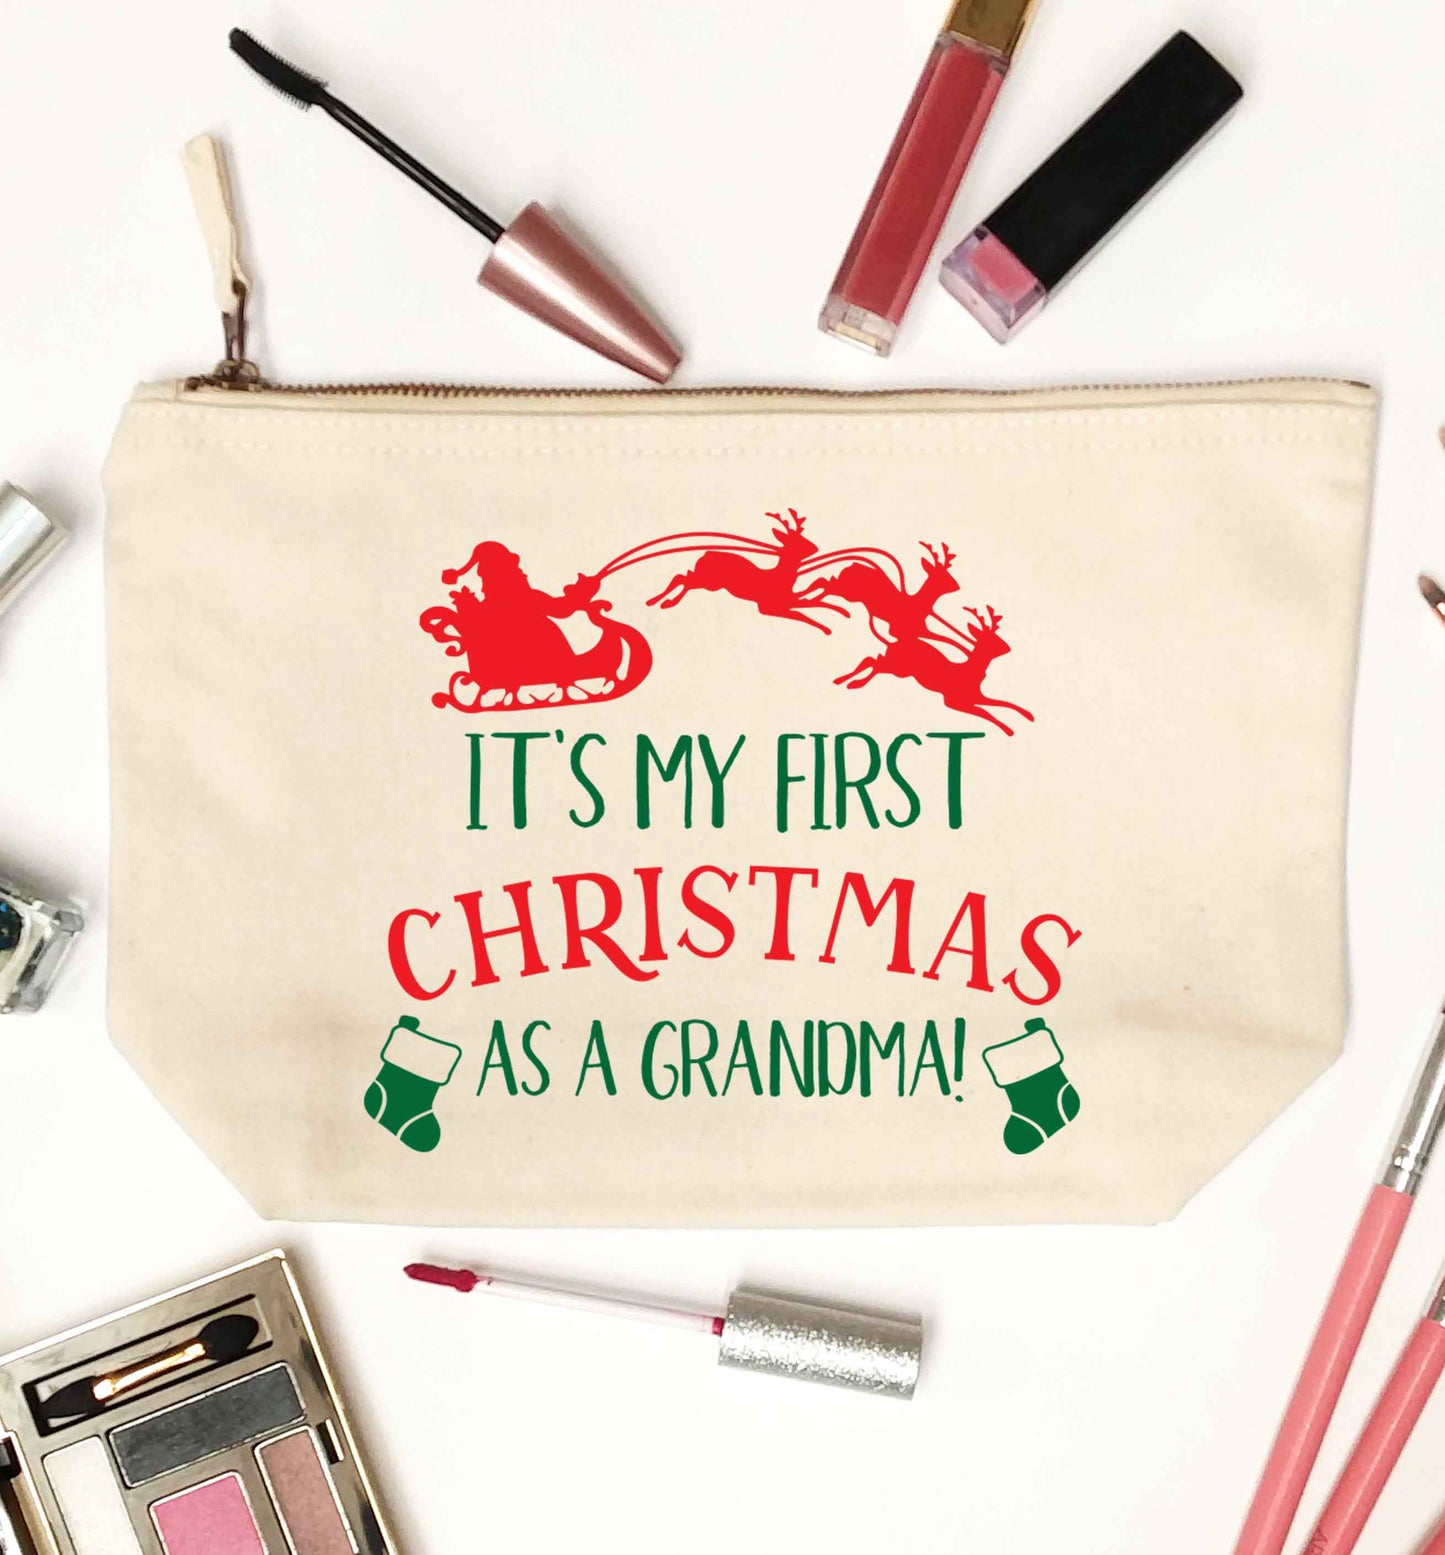 It's my first Christmas as a grandma! natural makeup bag